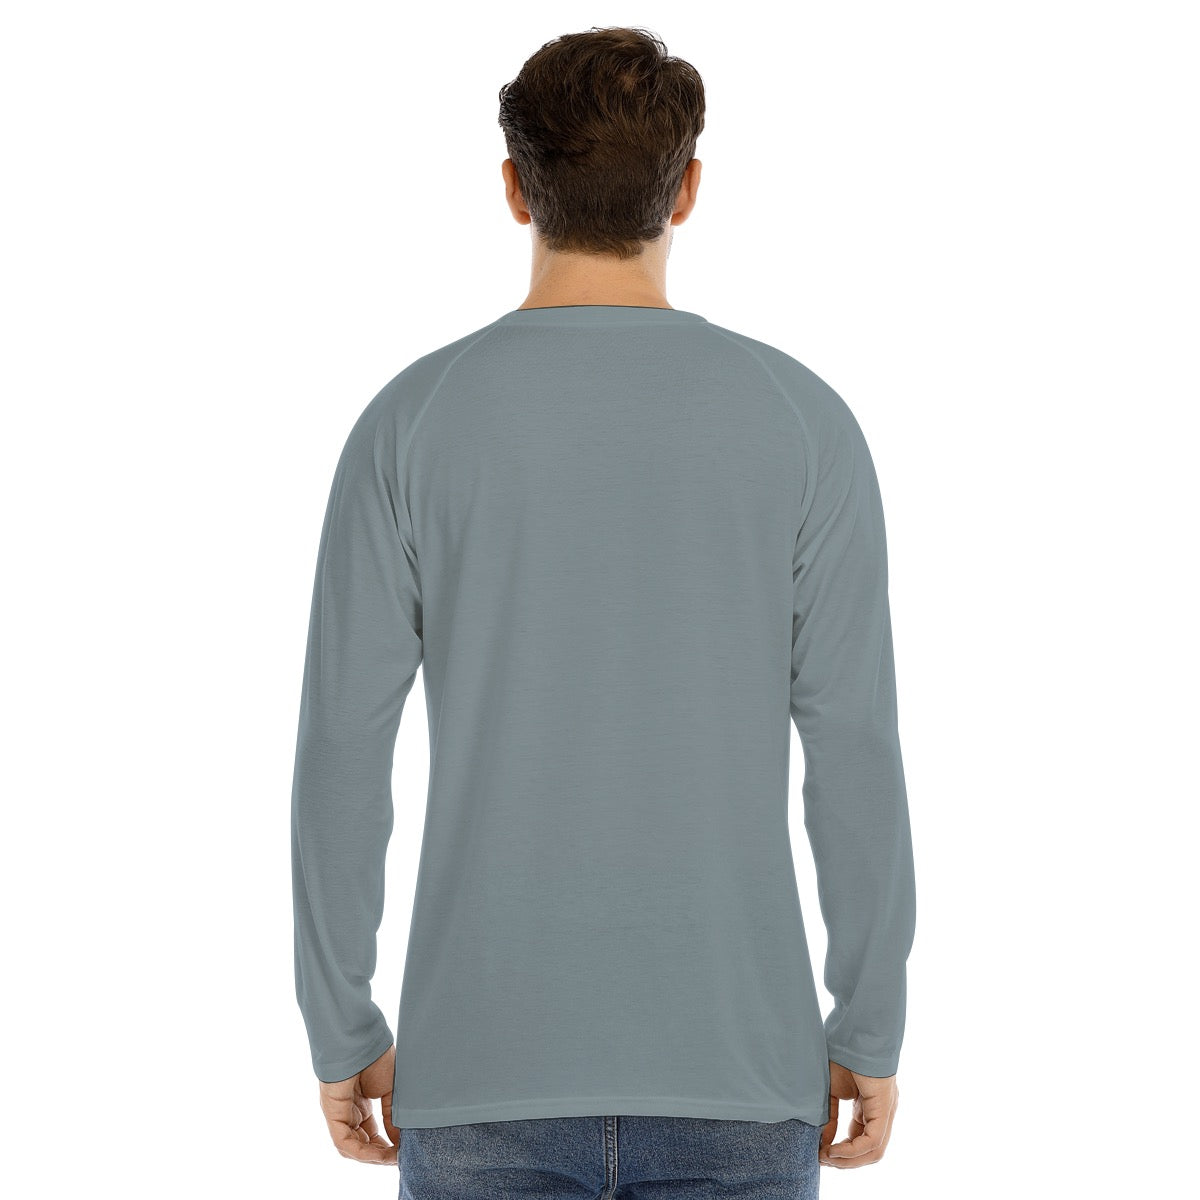 The Club 101 -- Men's Long Sleeve T-shirt With Raglan Sleeve